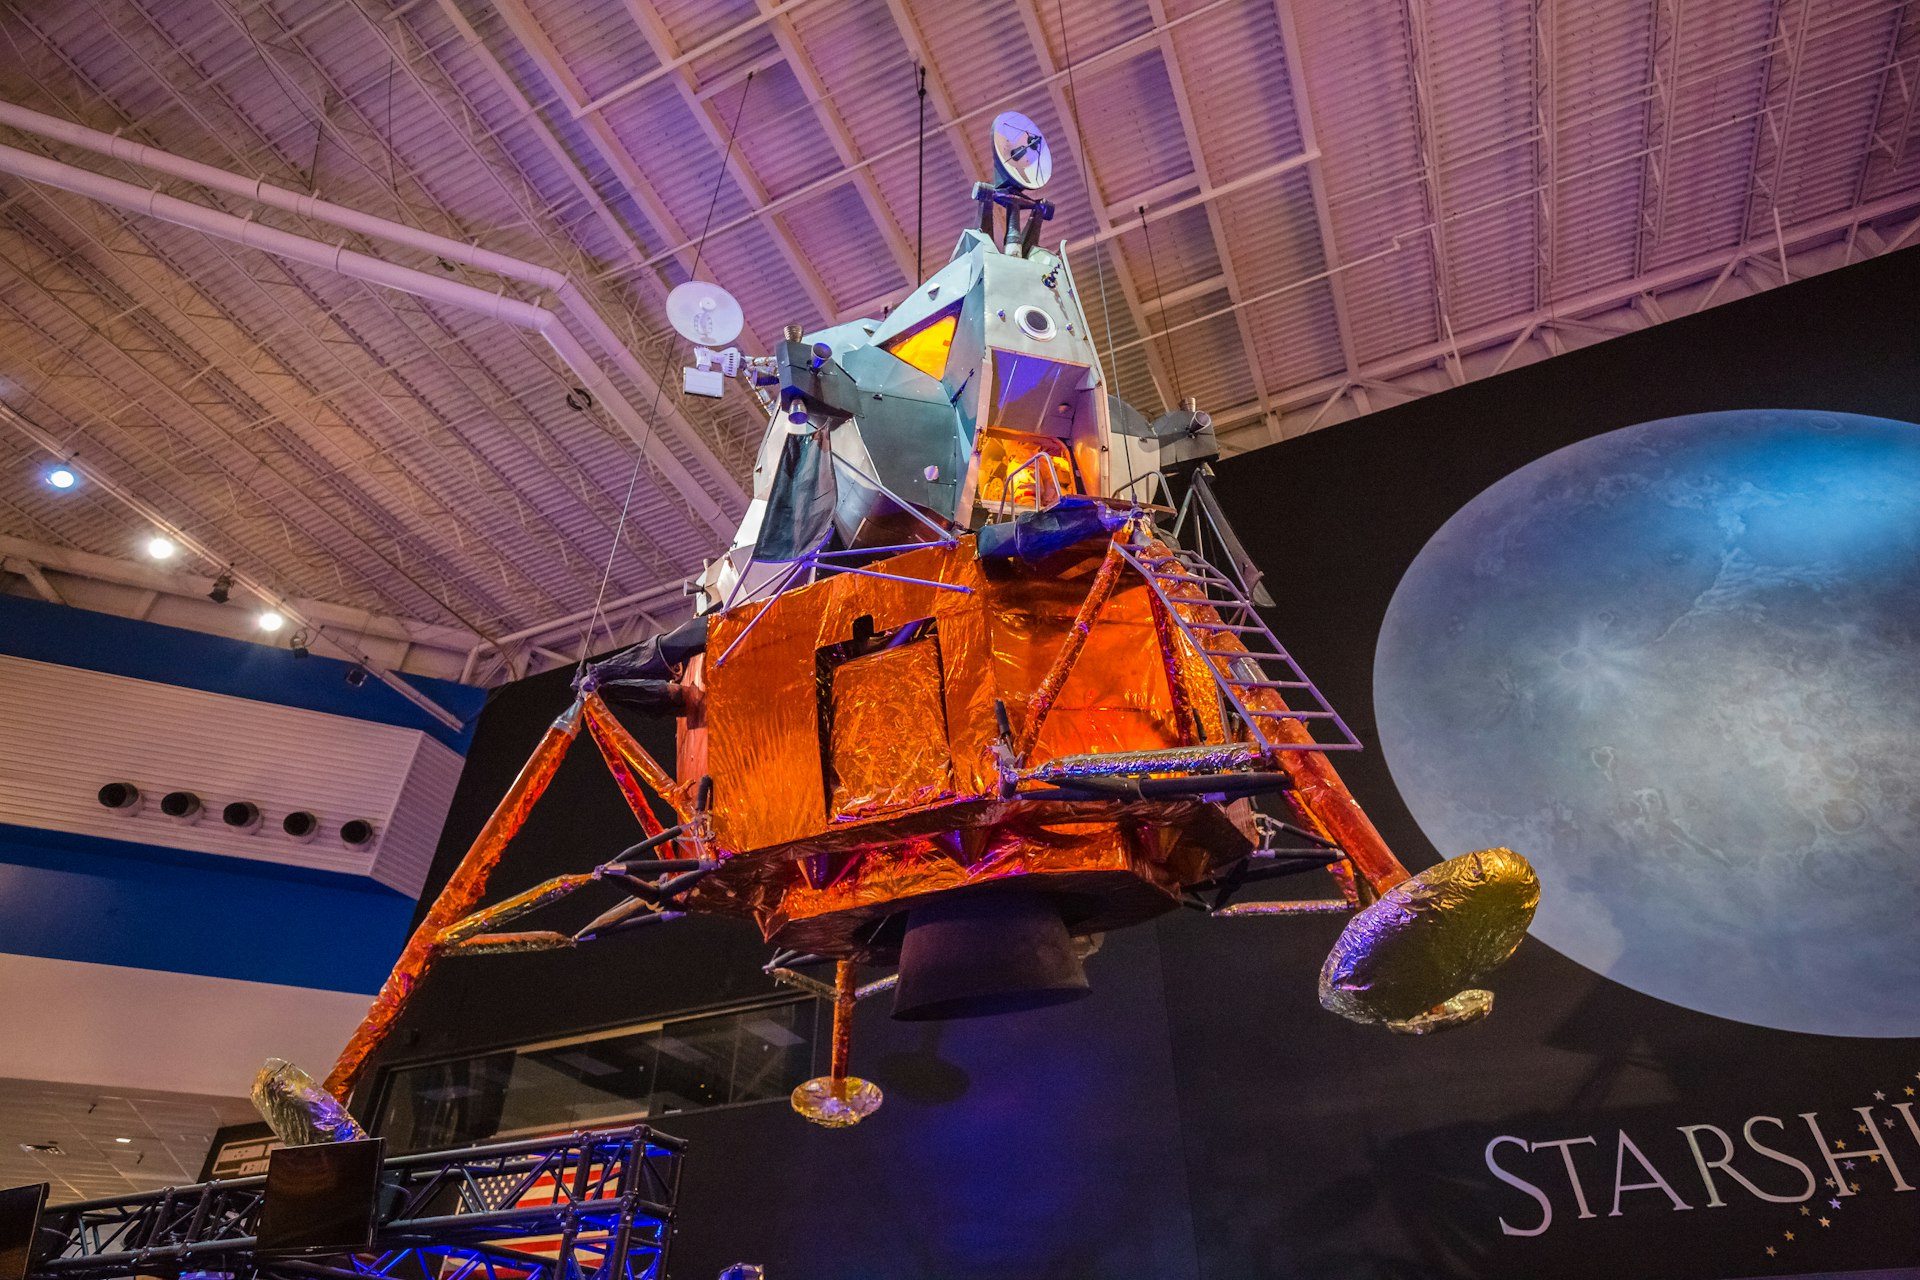  The Lunar Module LTA-8 in Houston's Space Center